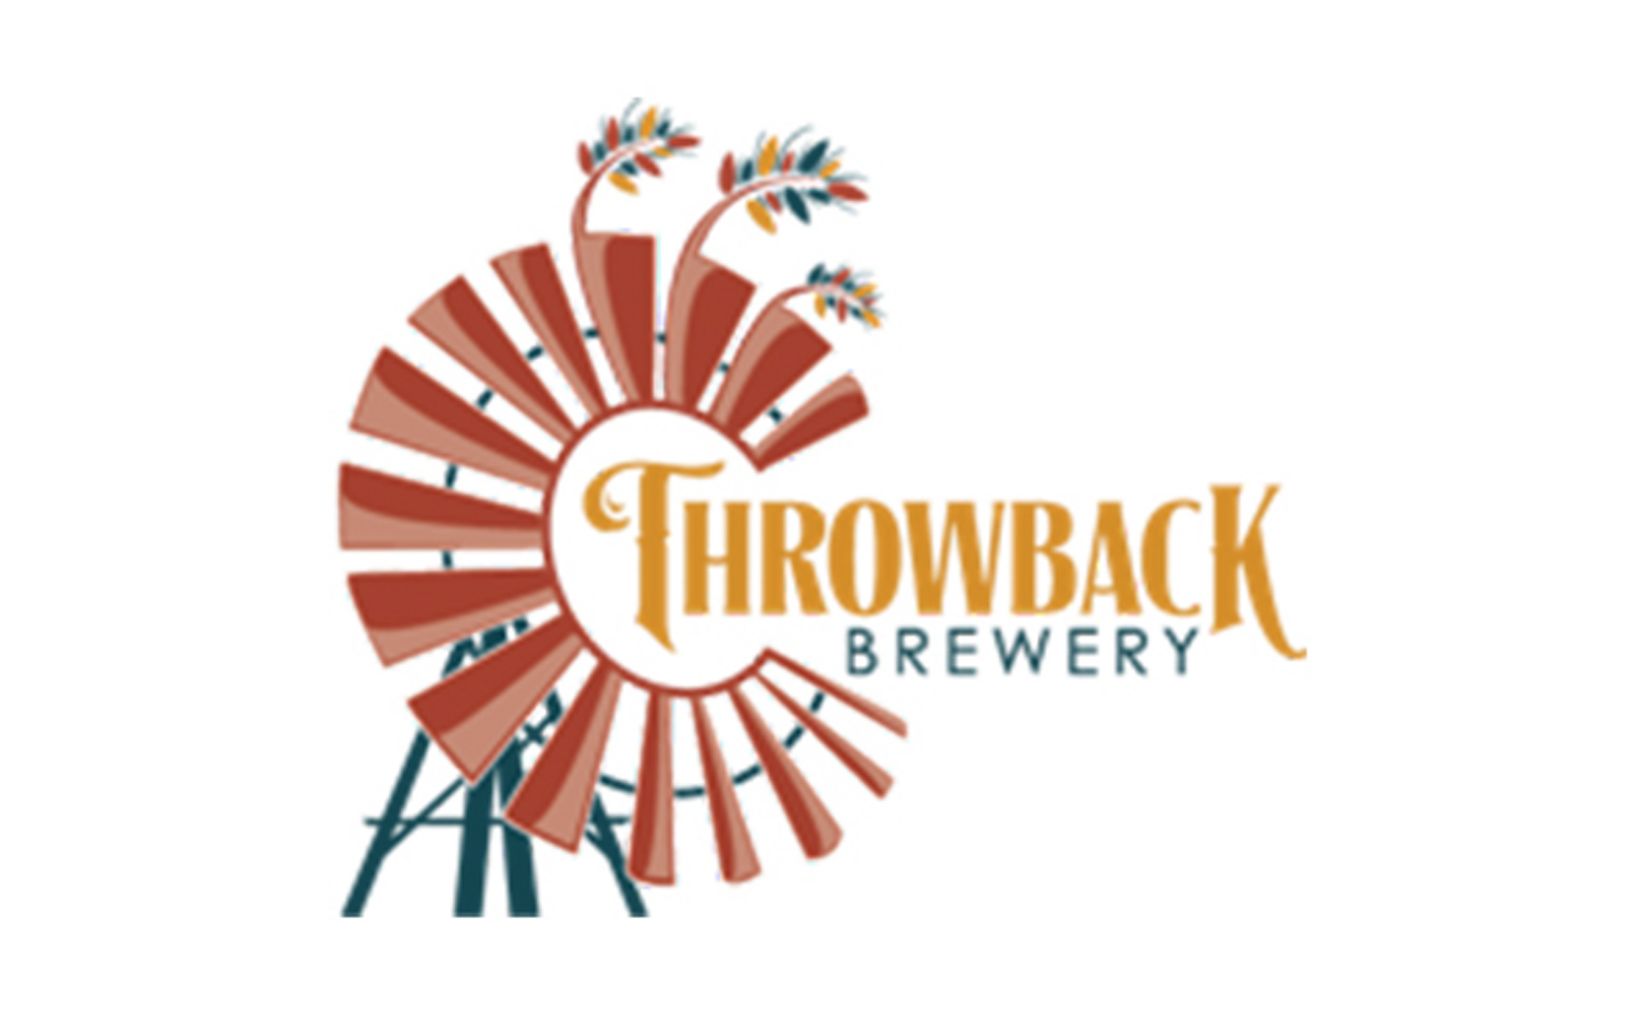 Throwback Brewery North Hampton, New Hampshire 